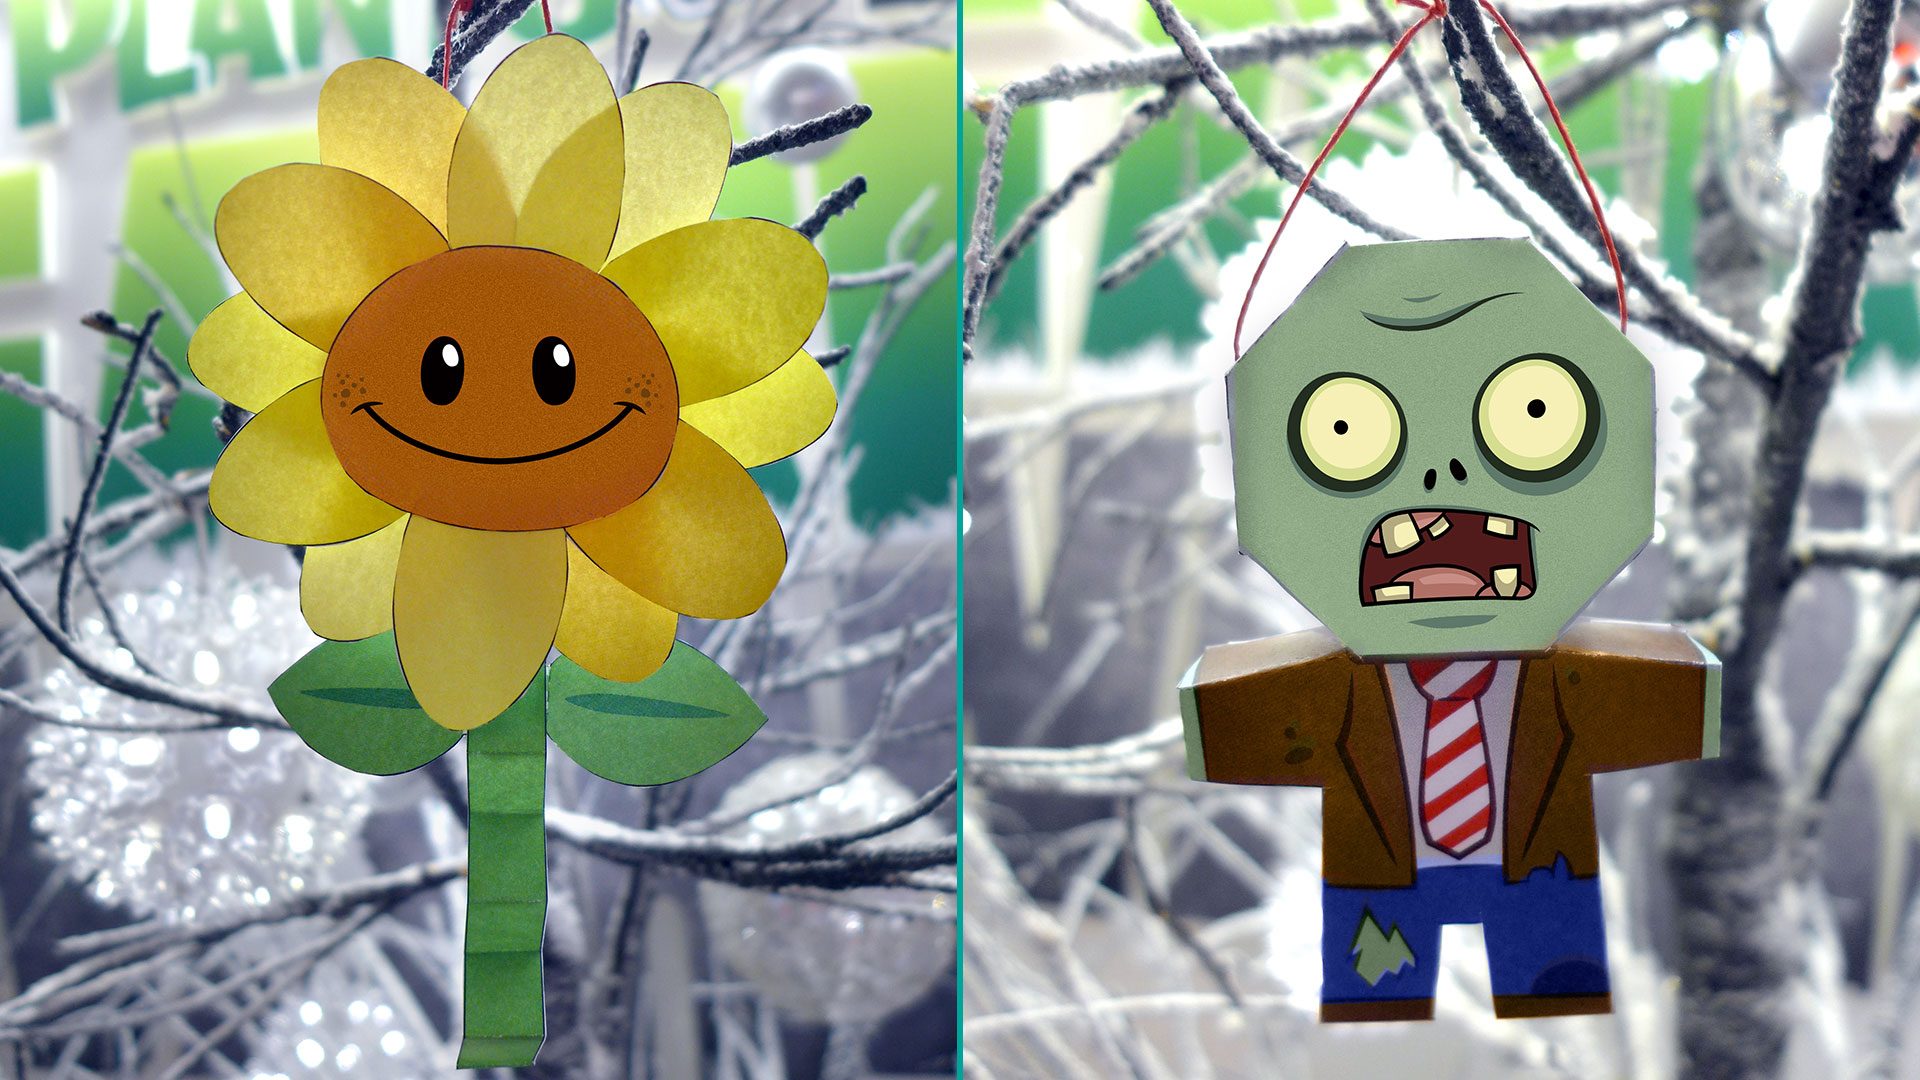 Plants Vs. Zombies' blossoms onto big screen